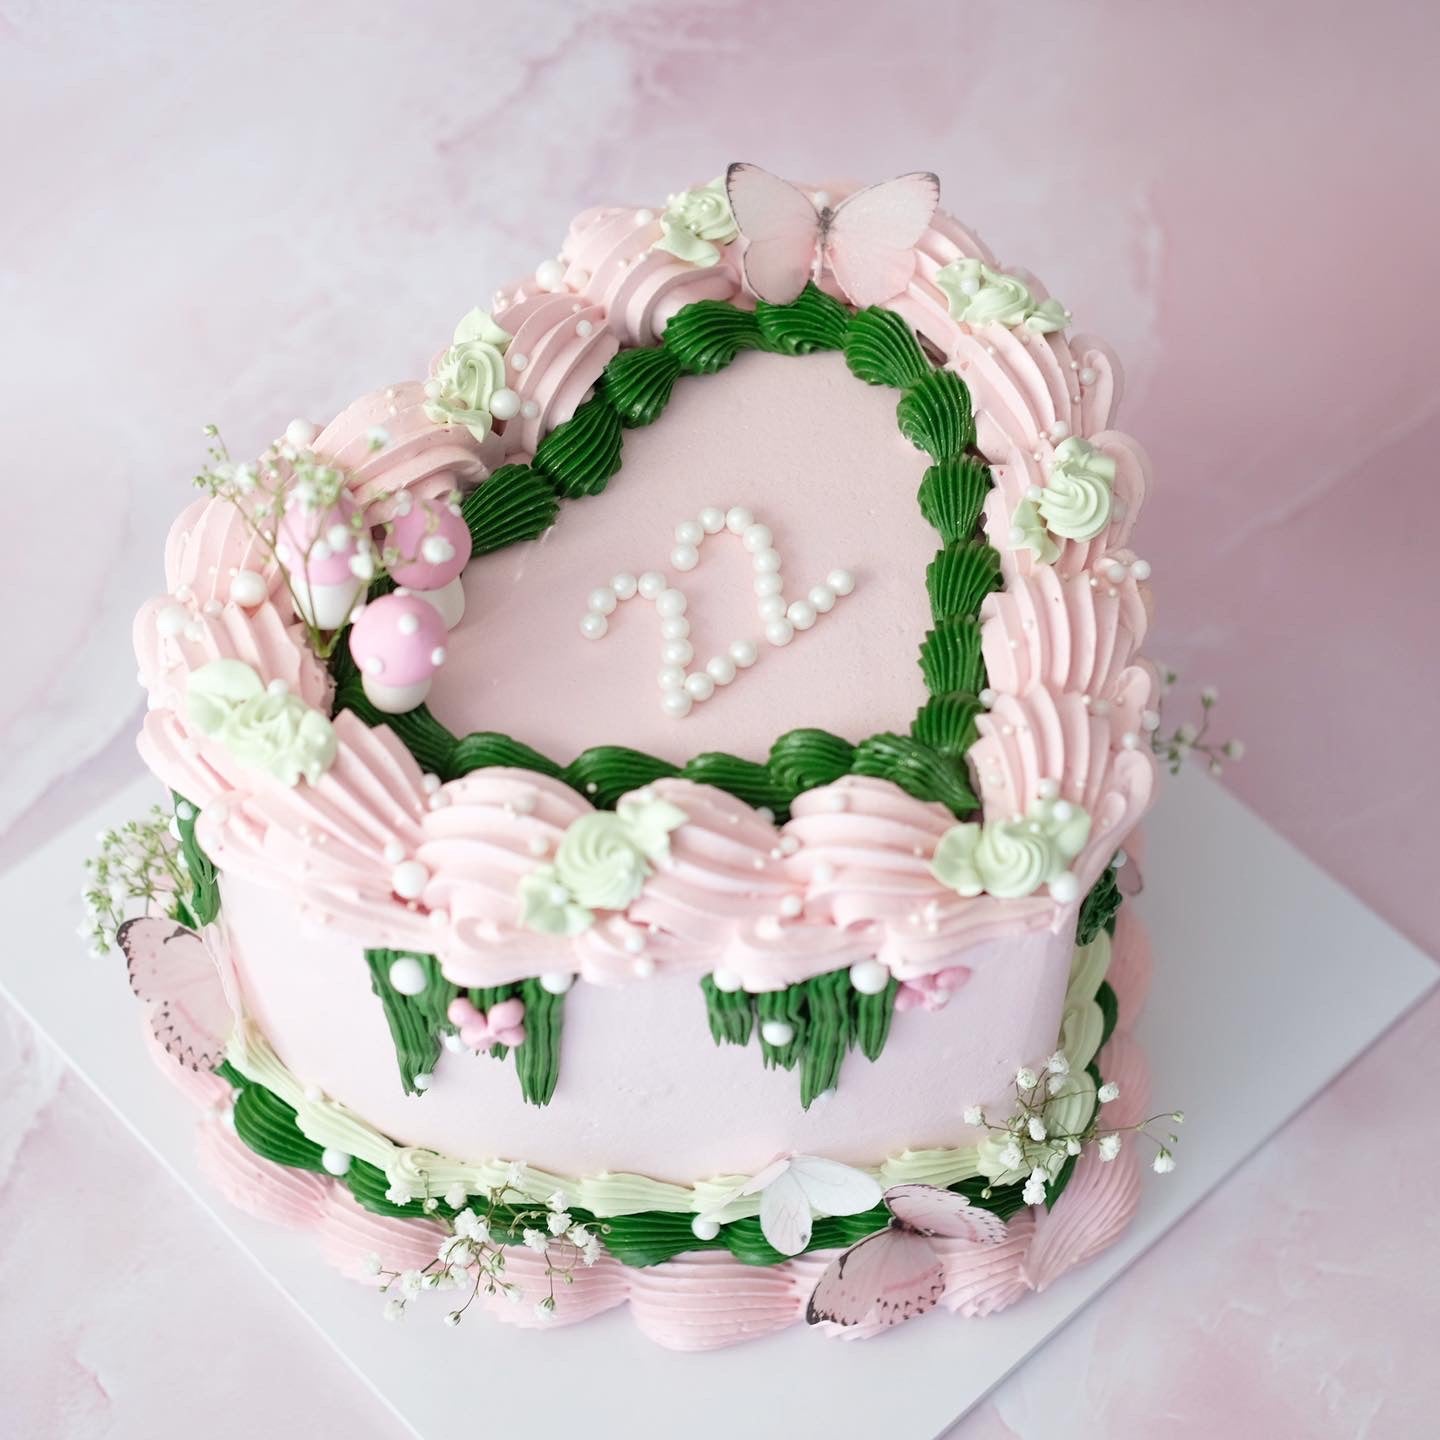 Kara's Party Ideas Fairy 1st Birthday Party Planning Ideas Supplies Idea  Cake Decorations